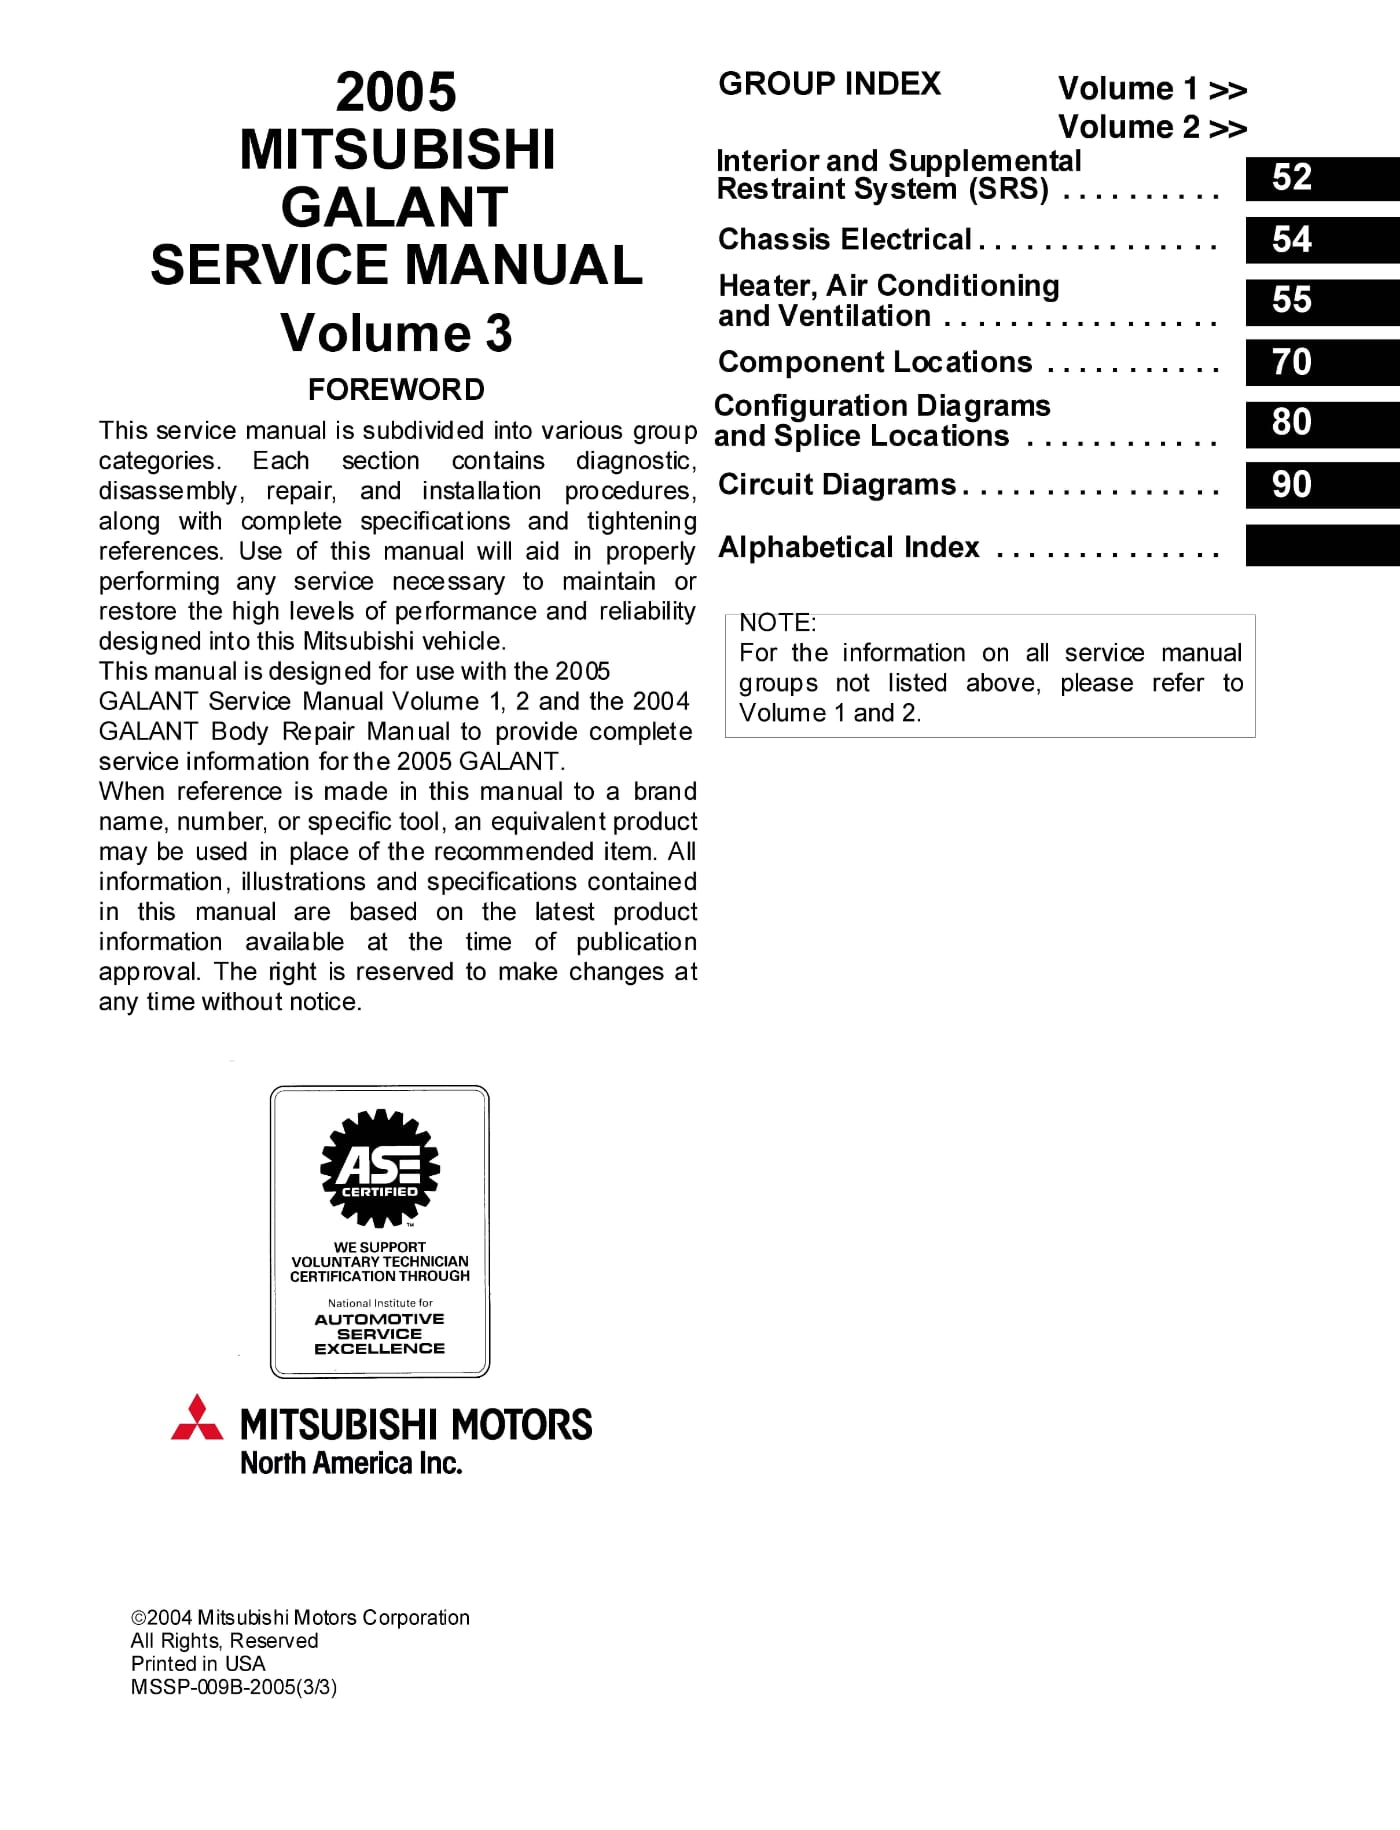 Table of Content 2005 Mitsubishi Galant Repair Manual - Volume 3